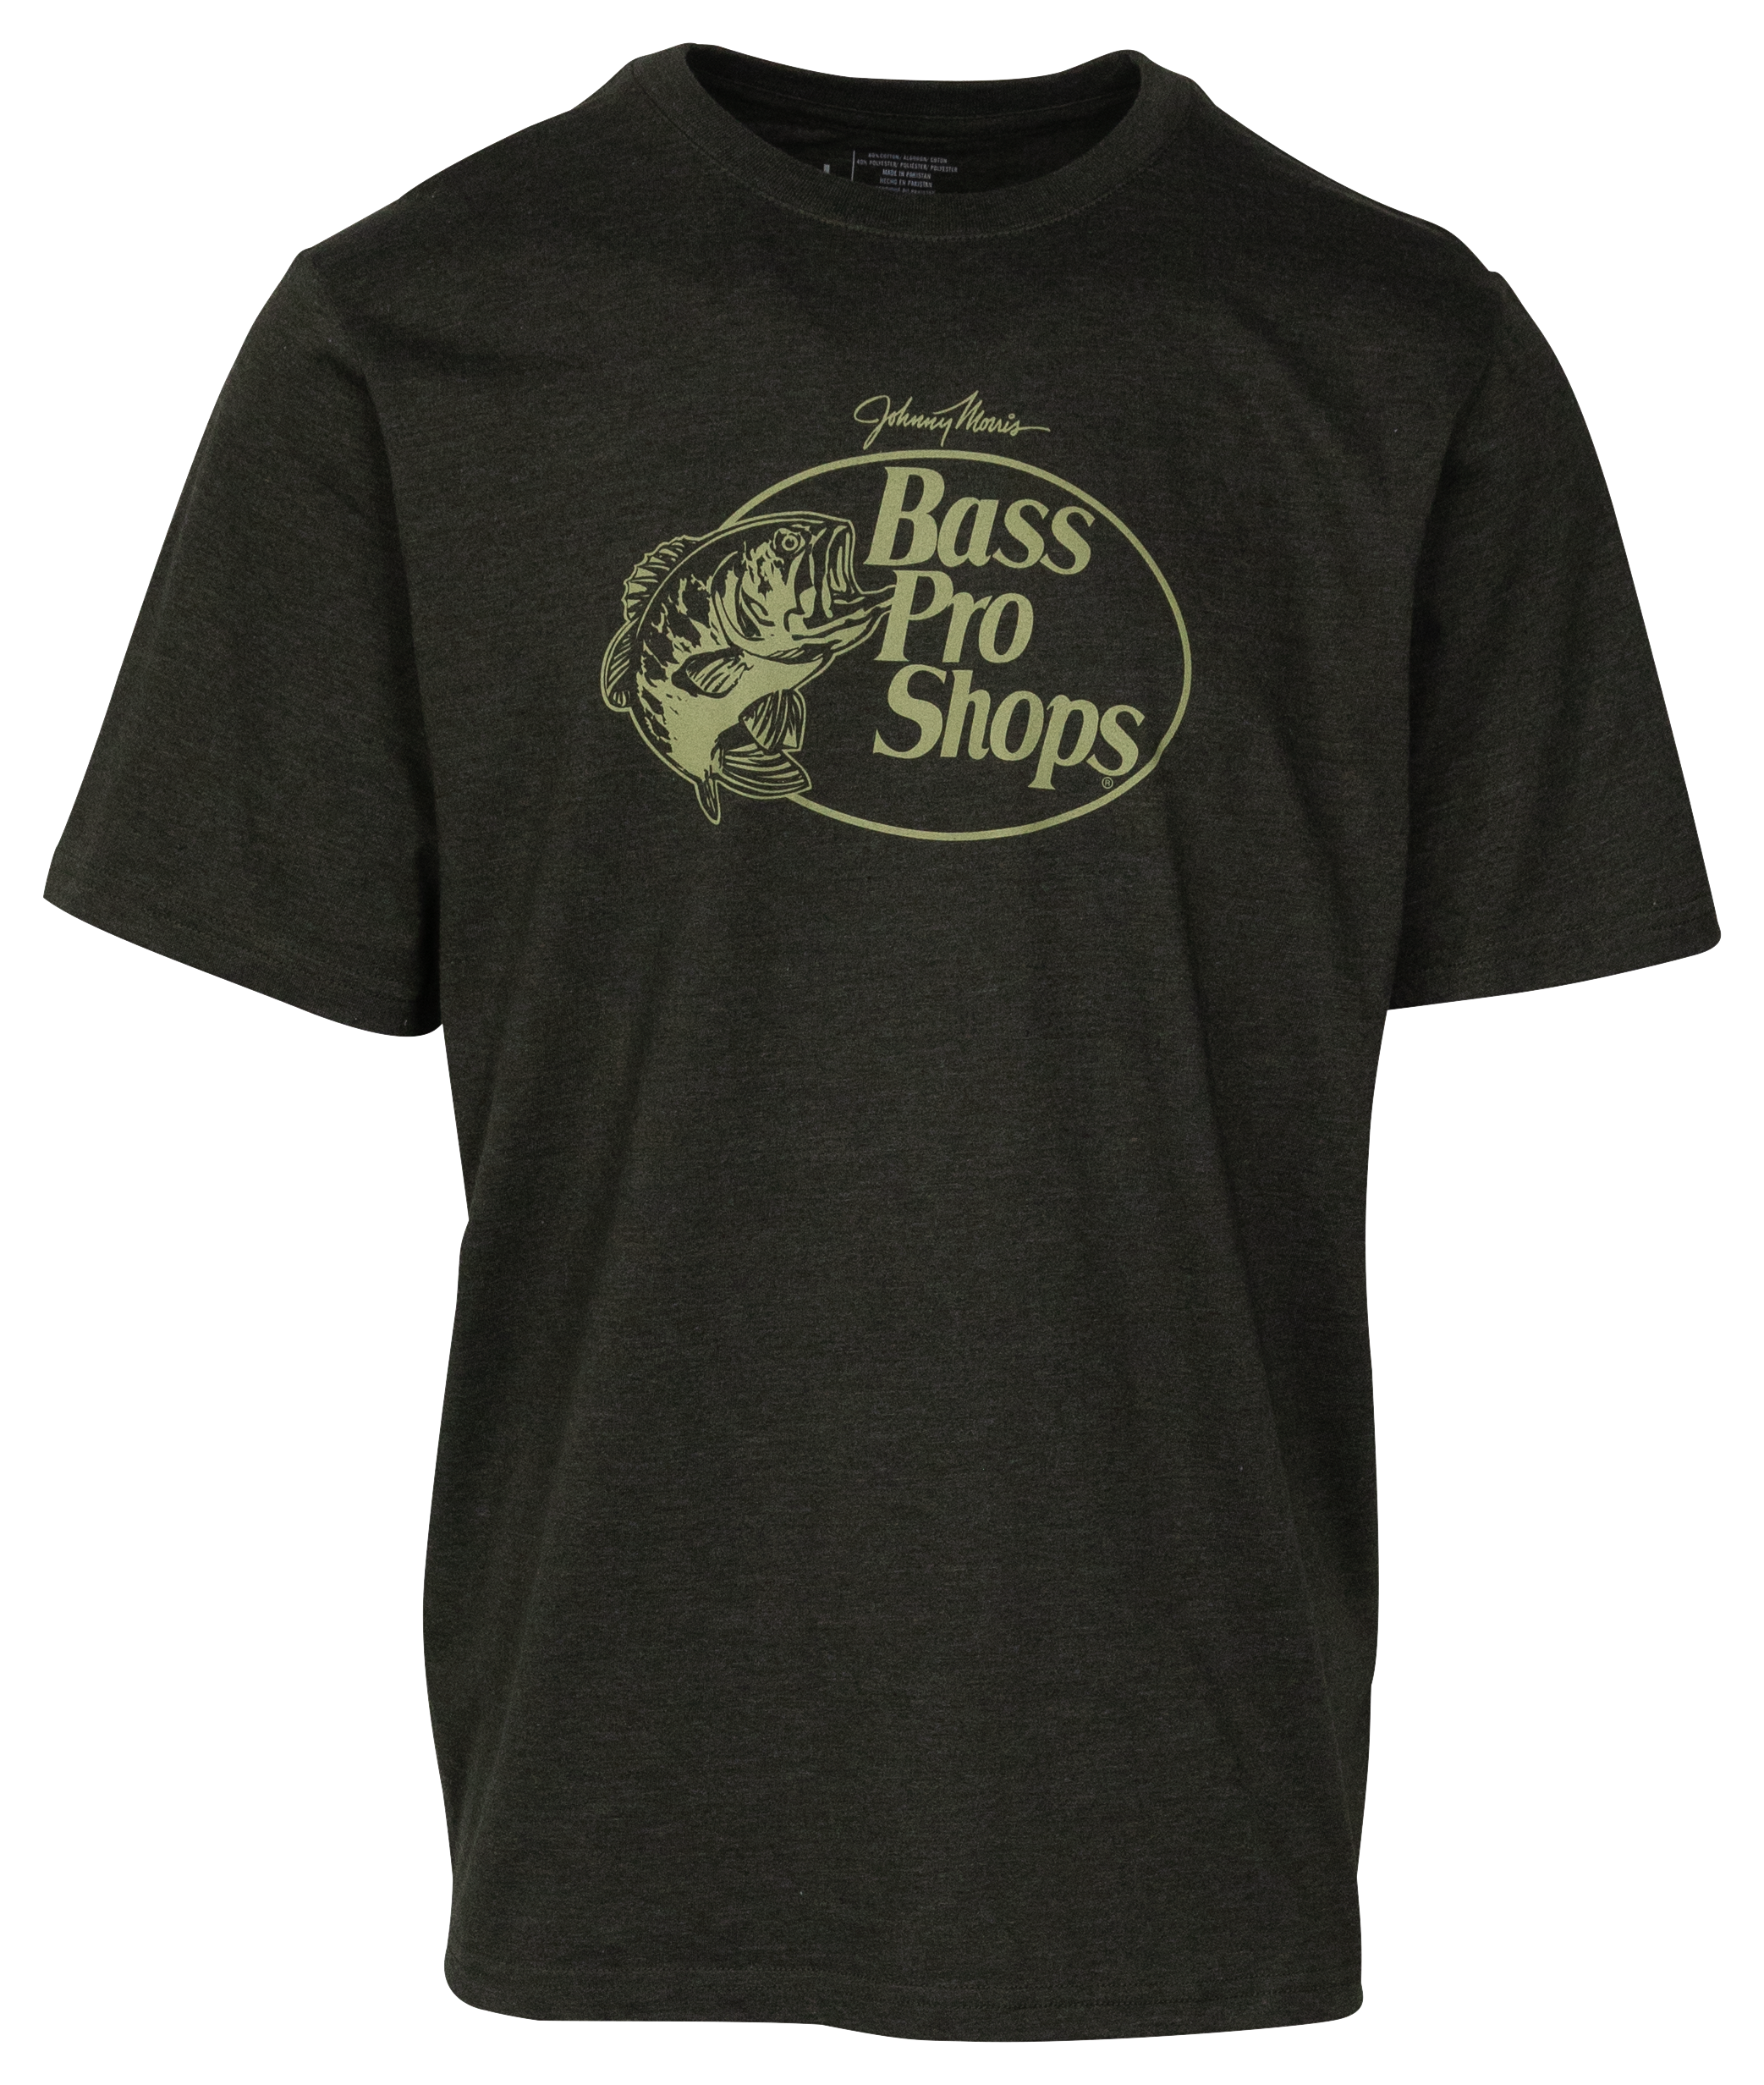 Bass Pro Shops Original Logo 2.0 Short-Sleeve T-Shirt for Men - Olive Heather - M